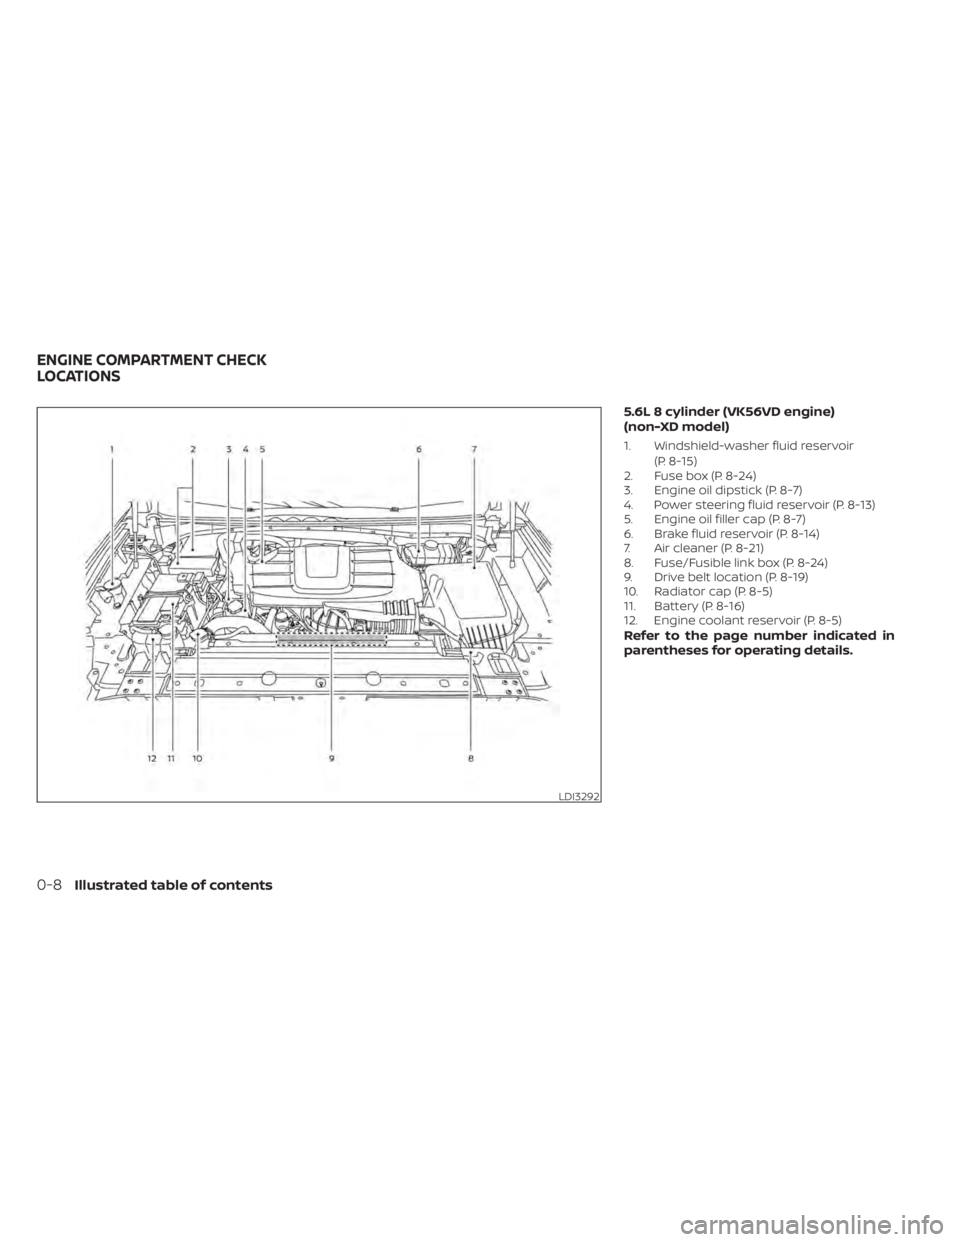 NISSAN TITAN 2021  Owner´s Manual 5.6L 8 cylinder (VK56VD engine)
(non-XD model)
1. Windshield-washer fluid reservoir(P. 8-15)
2. Fuse box (P. 8-24)
3. Engine oil dipstick (P. 8-7)
4. Power steering fluid reservoir (P. 8-13)
5. Engine